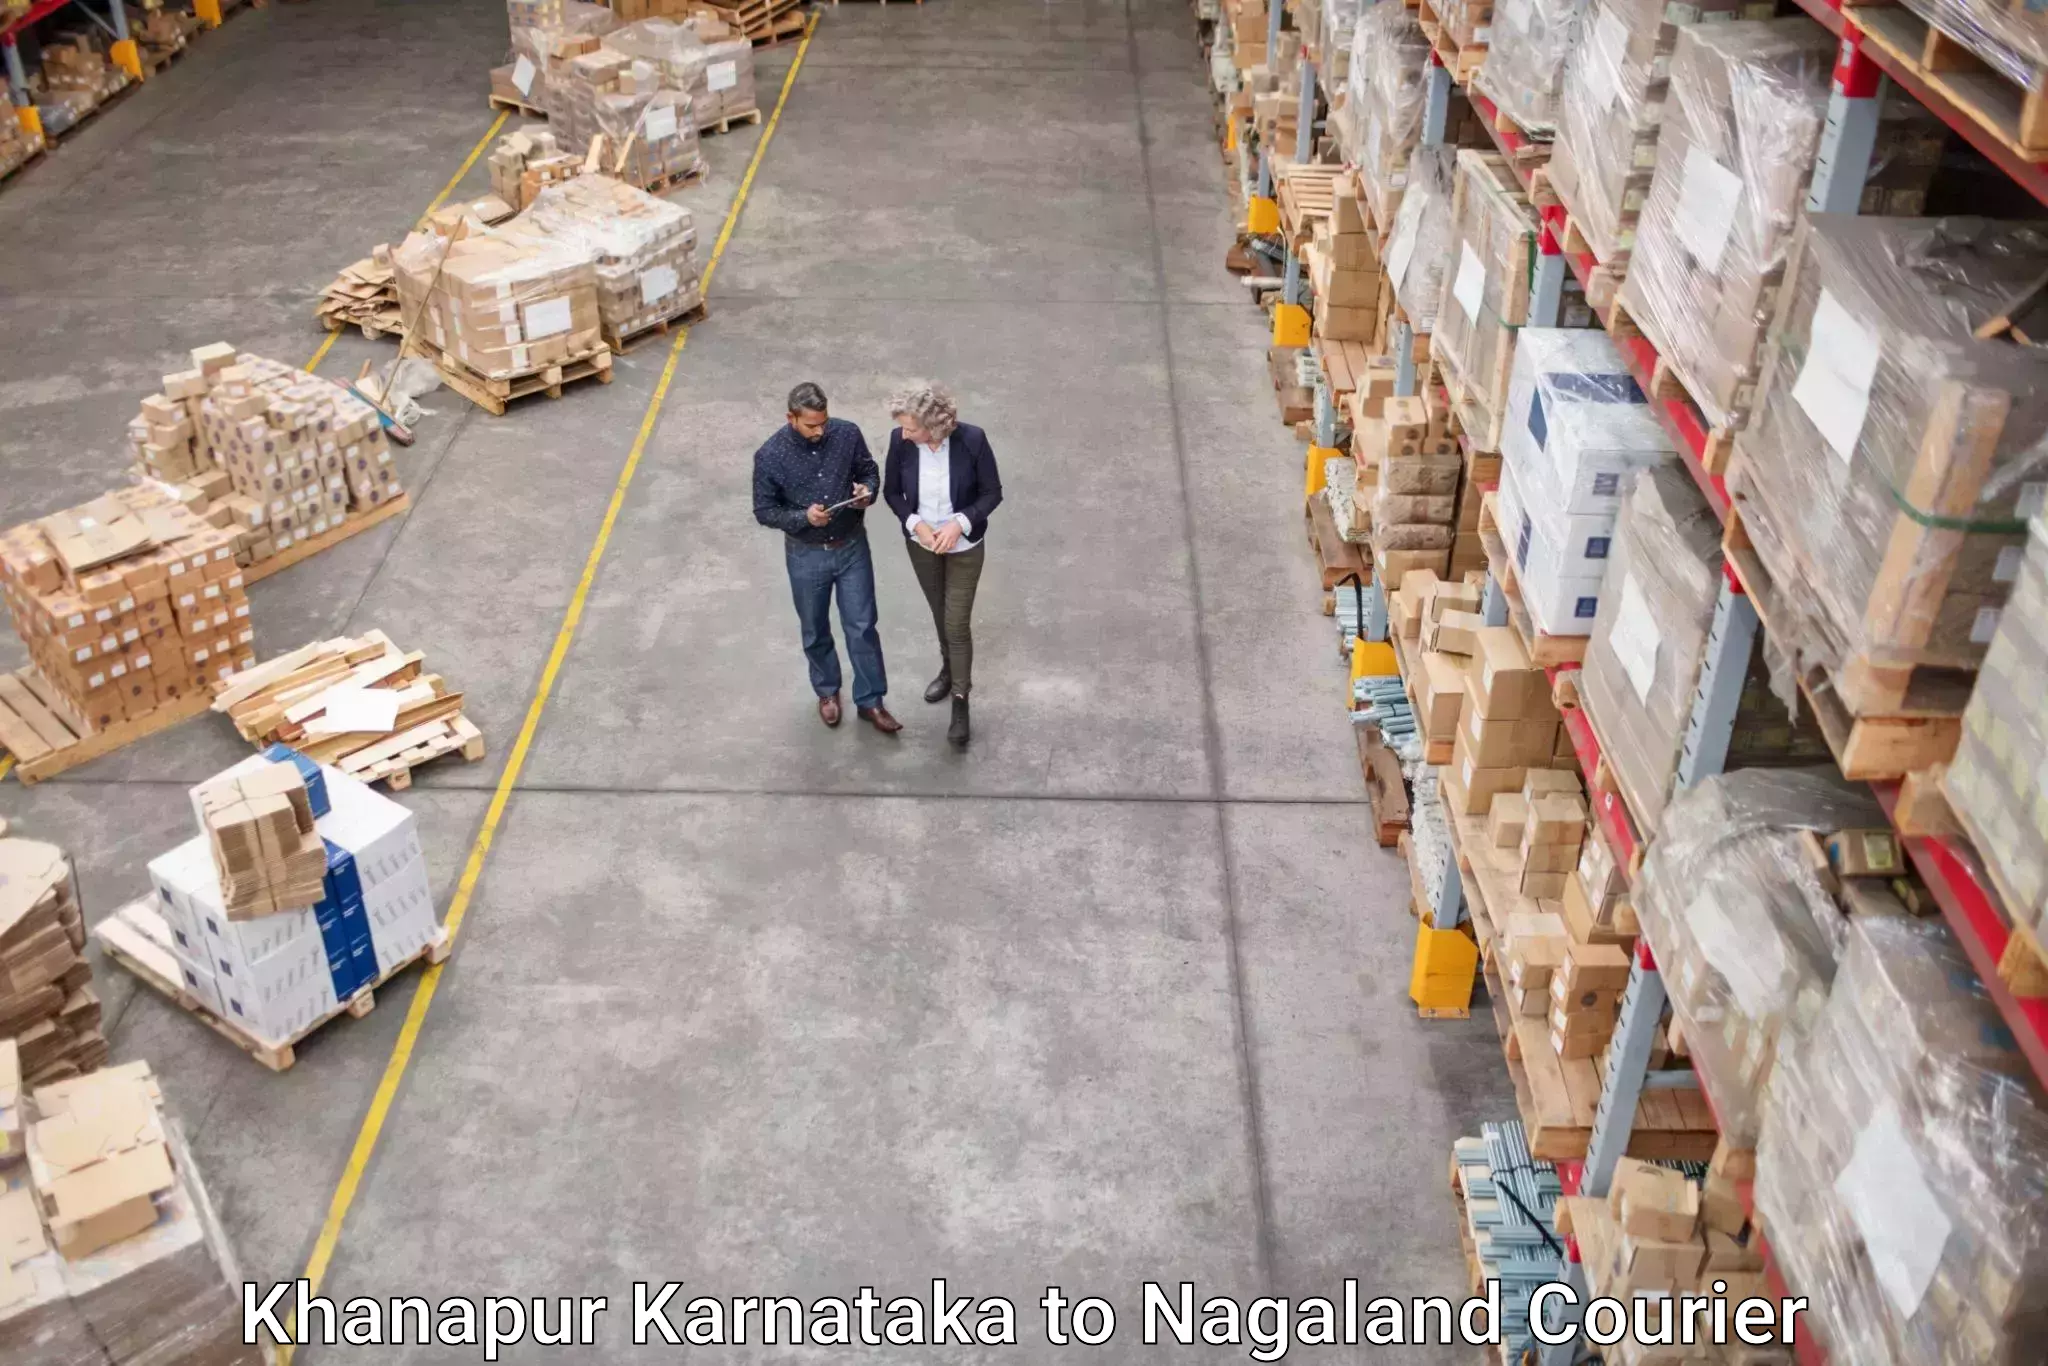 Personalized courier experiences Khanapur Karnataka to Nagaland